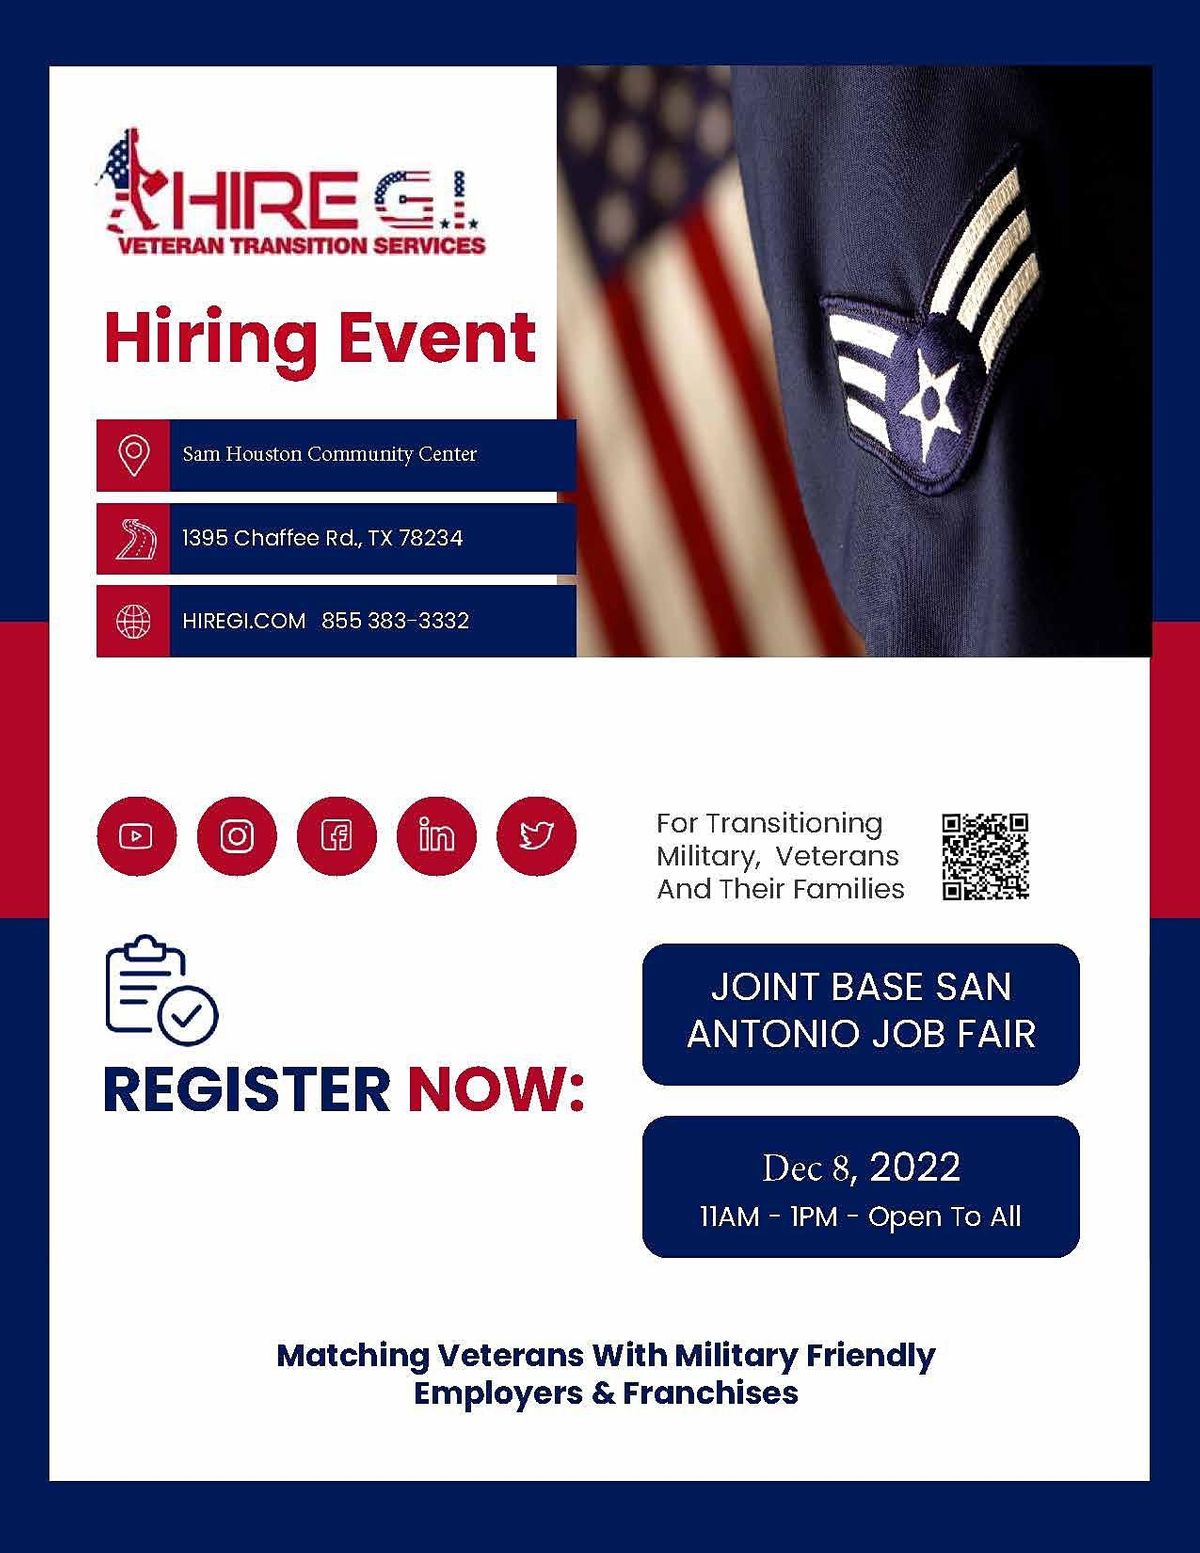 Joint Base San Antonio Hiring Event - Dec 2022